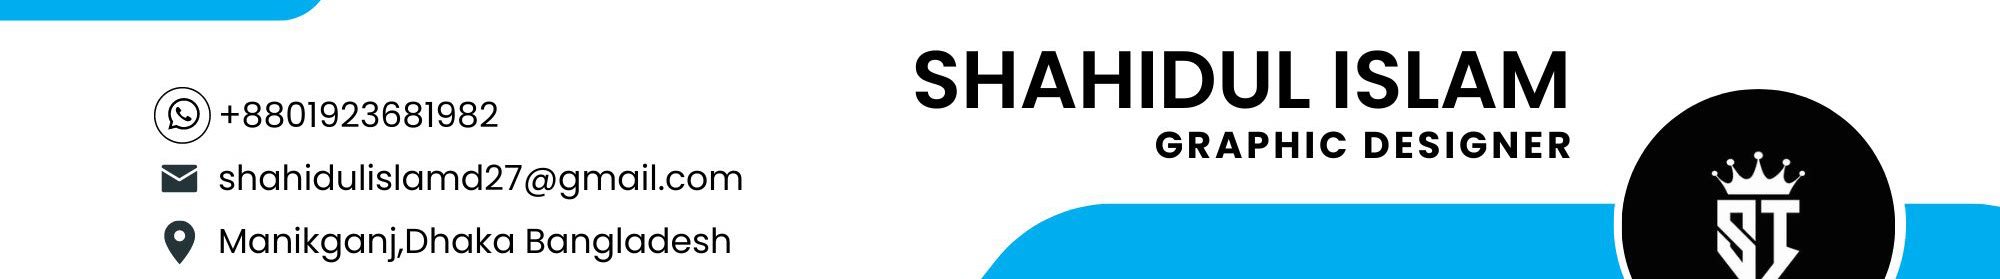 Profielbanner van Shahidul Islam